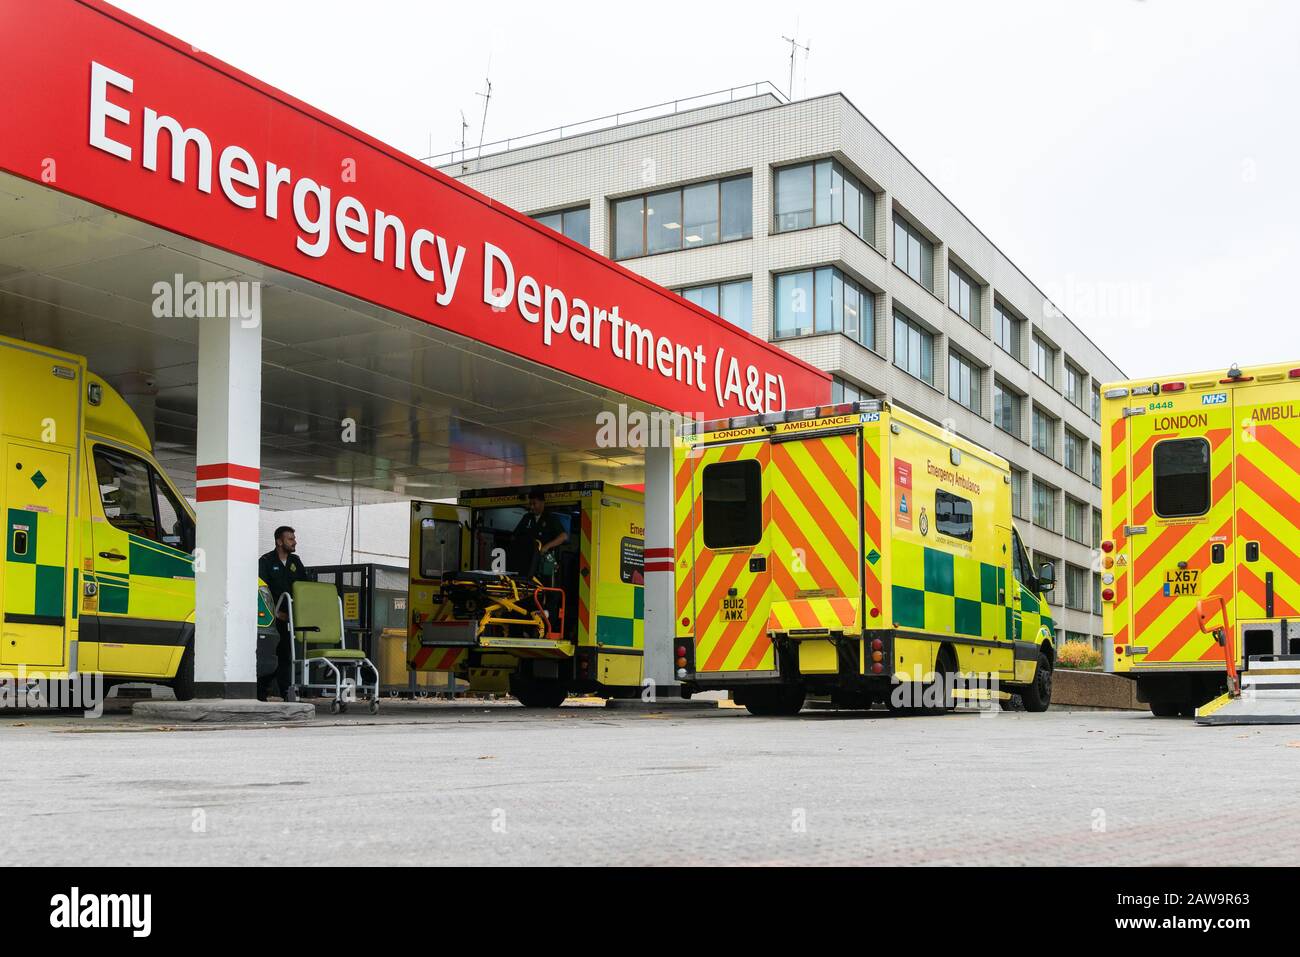 7th Oct 2019 - London, UK. Ambulance vehicles in Emergency Department (A&E) at St Thomas hospital. Stock Photo